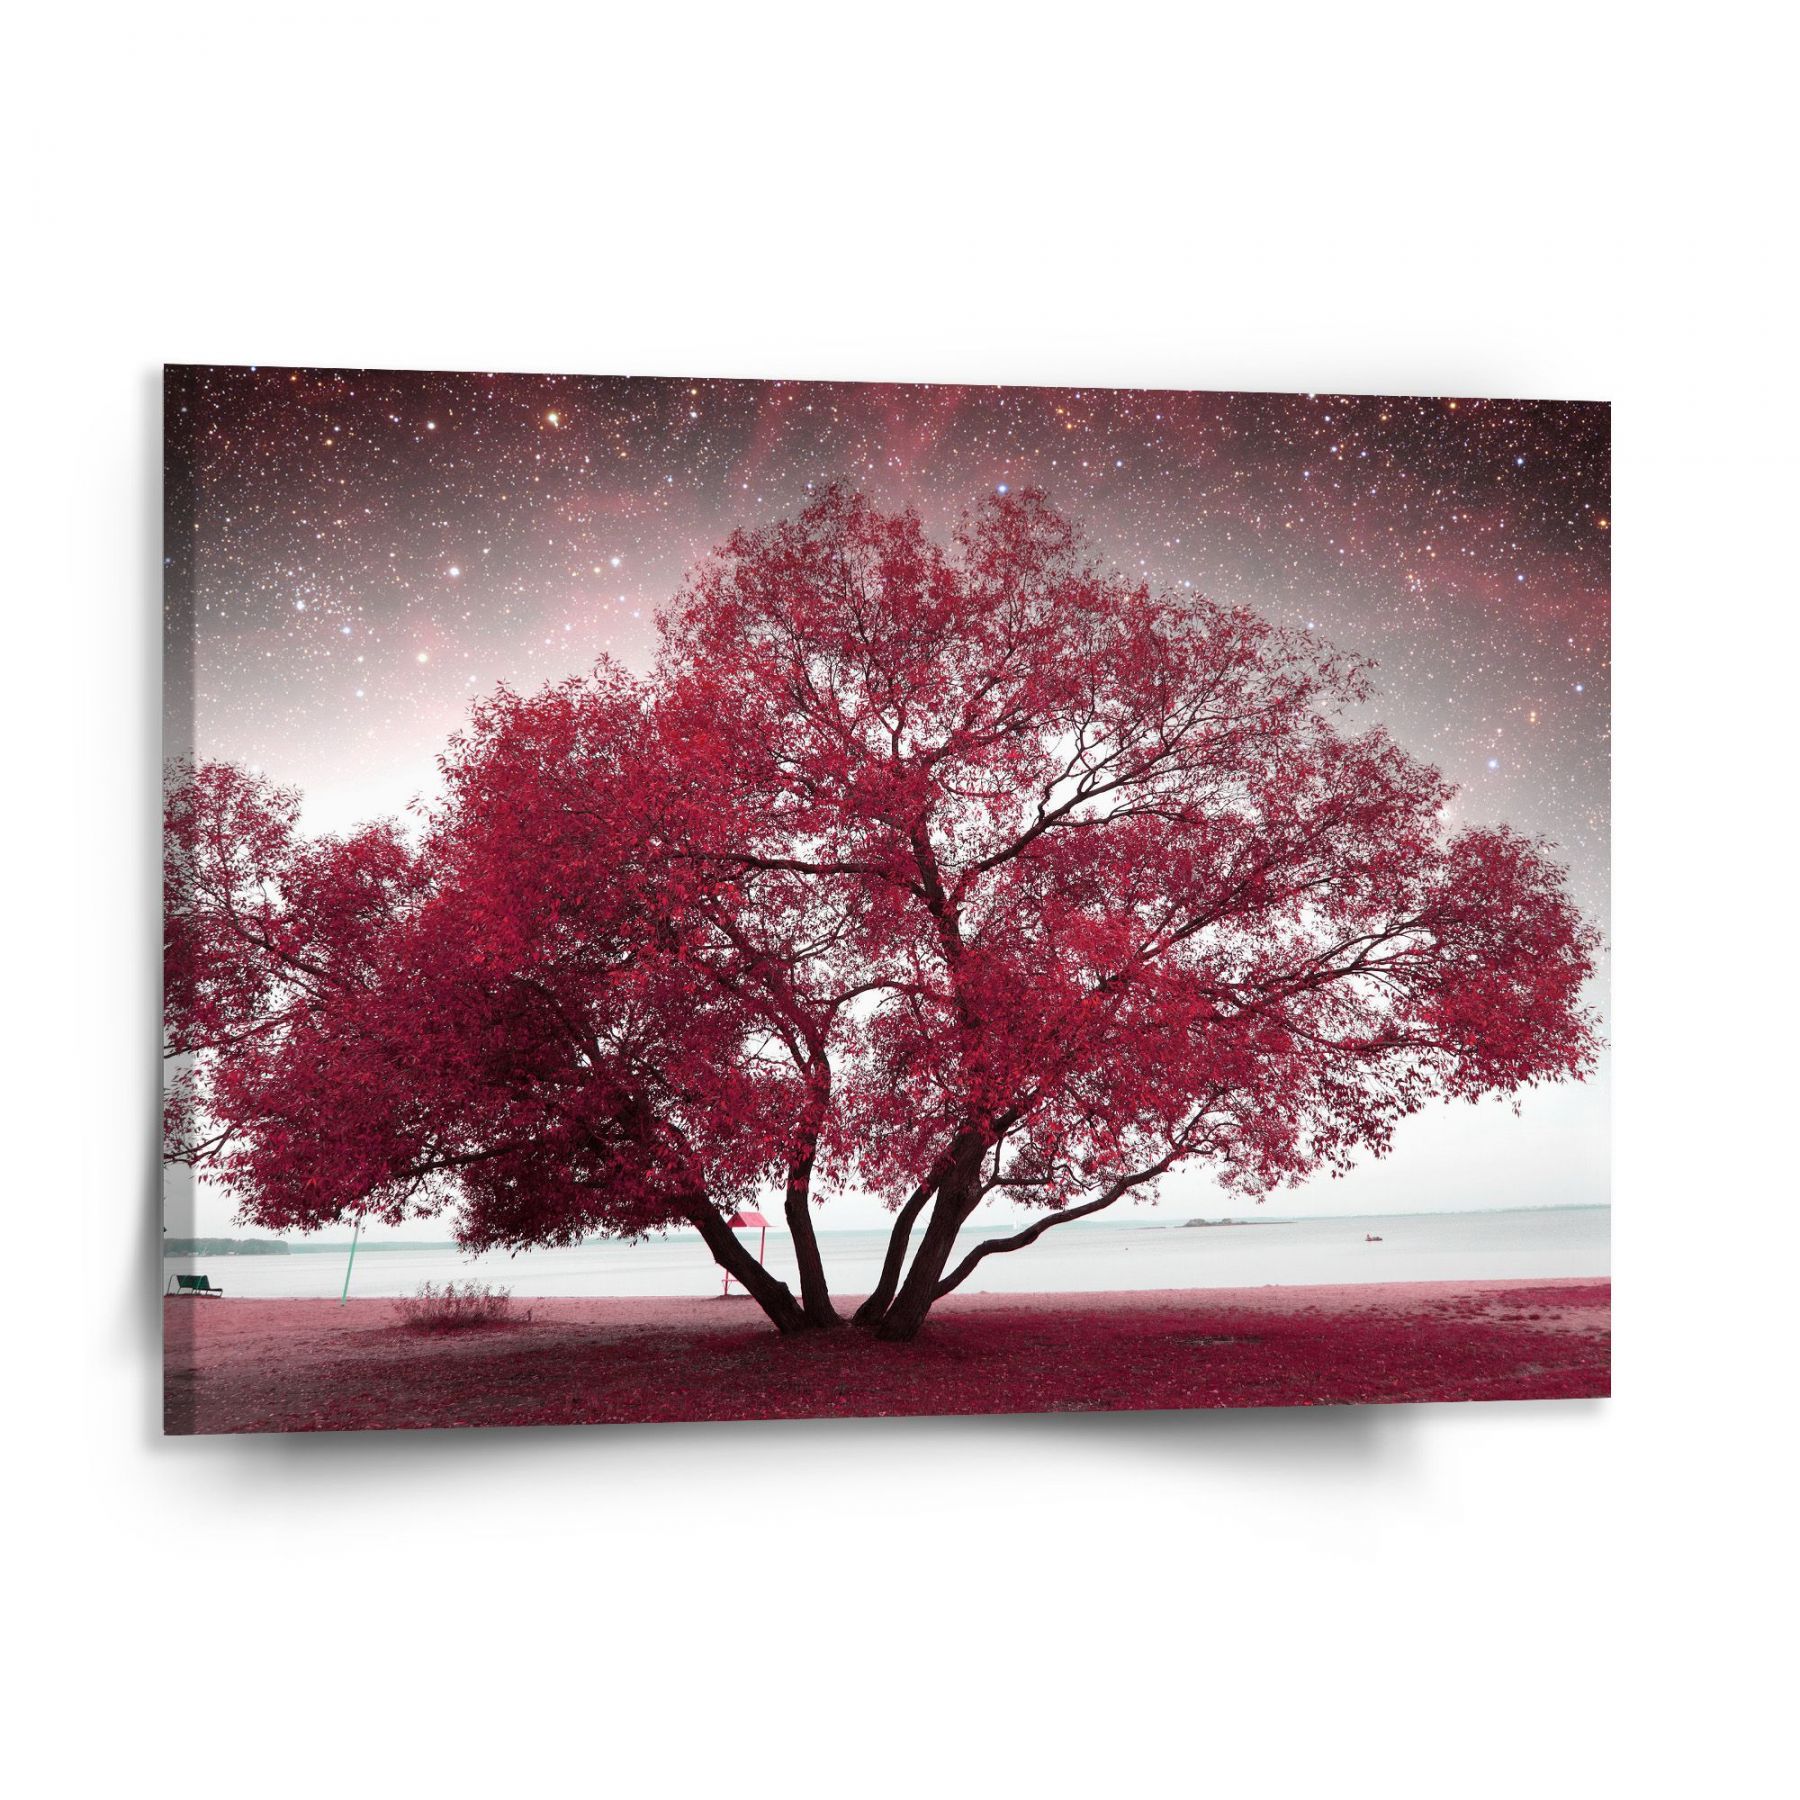 Obraz SABLIO - Červený strom 150x110 cm - E-shop Sablo s.r.o.